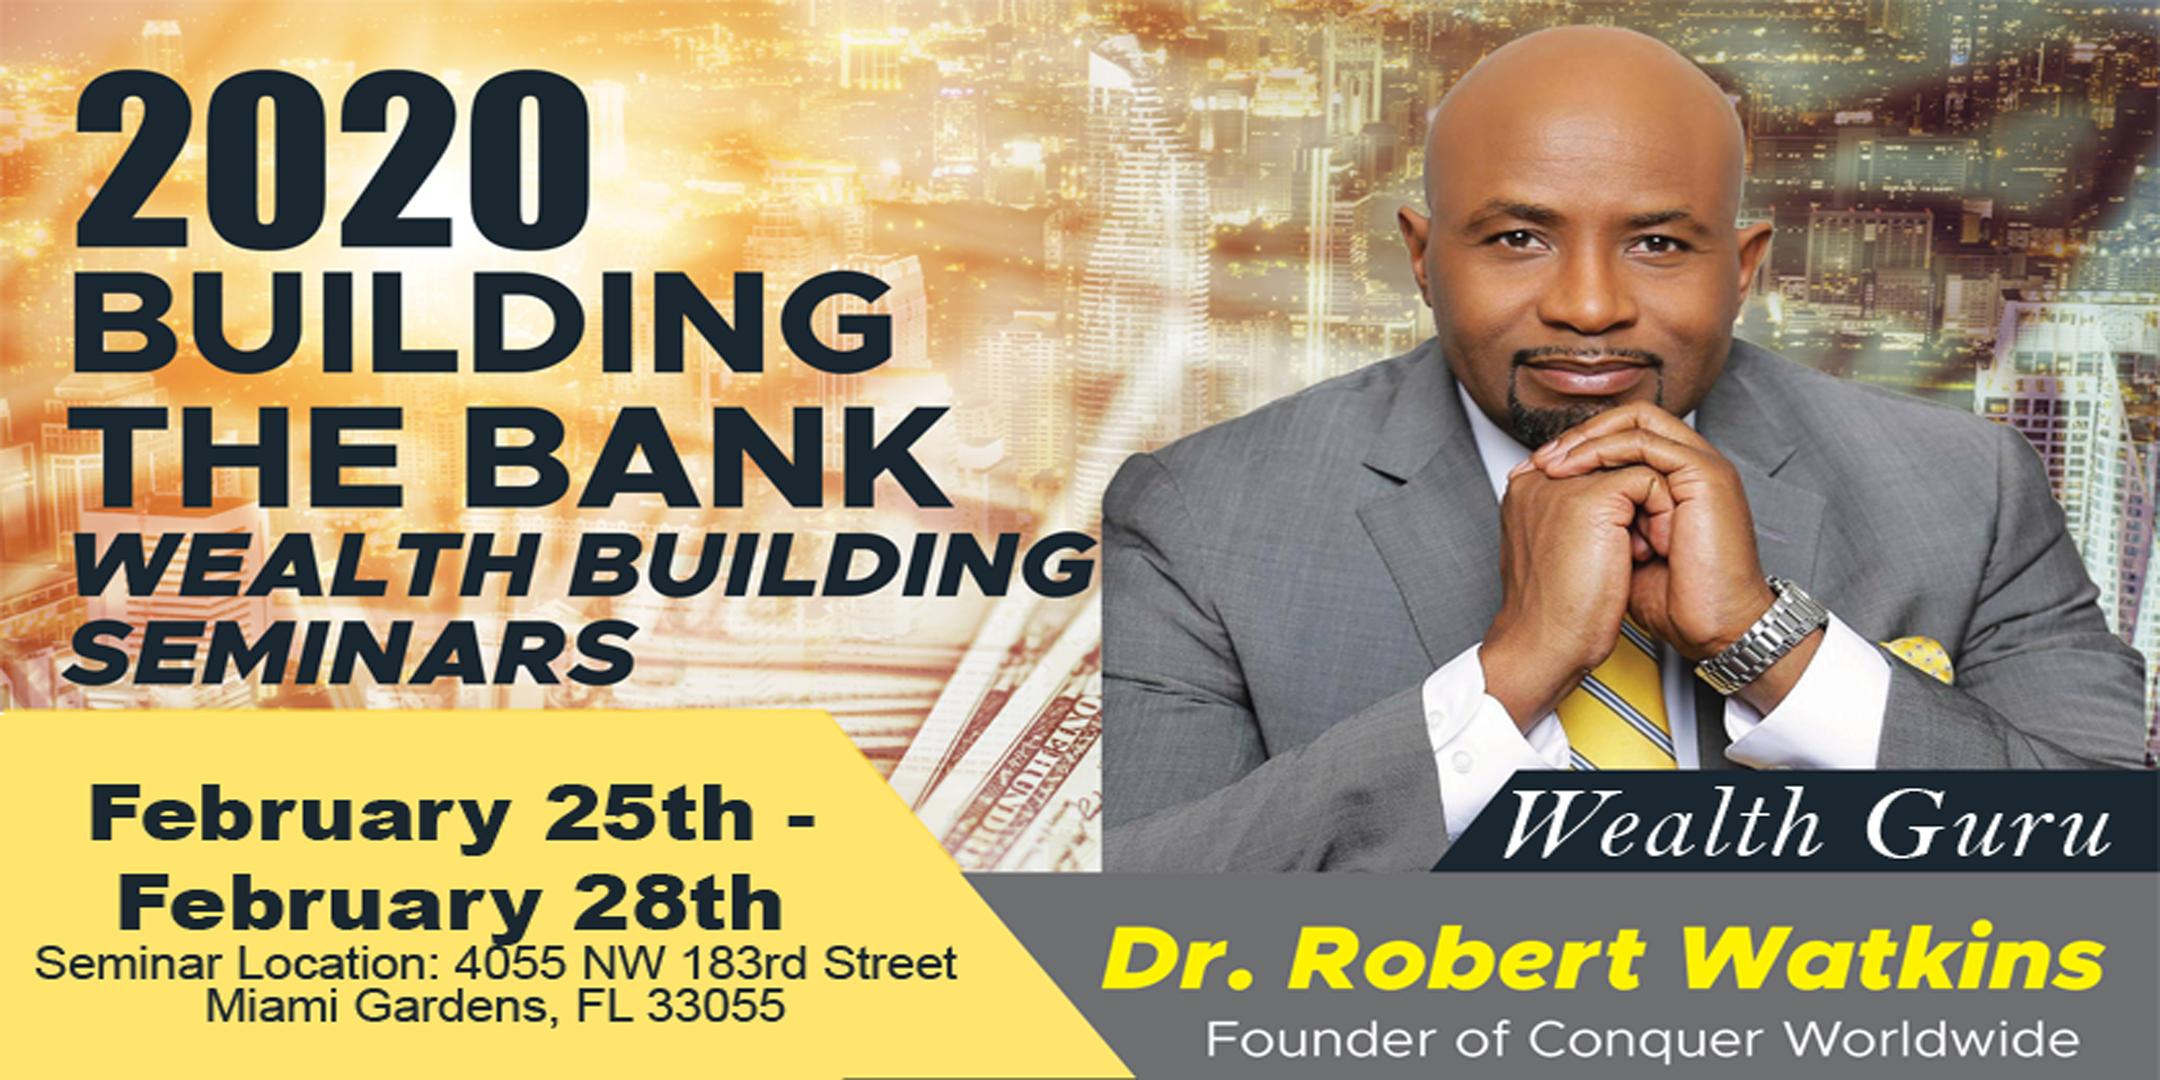 Building the Bank Wealth Seminars